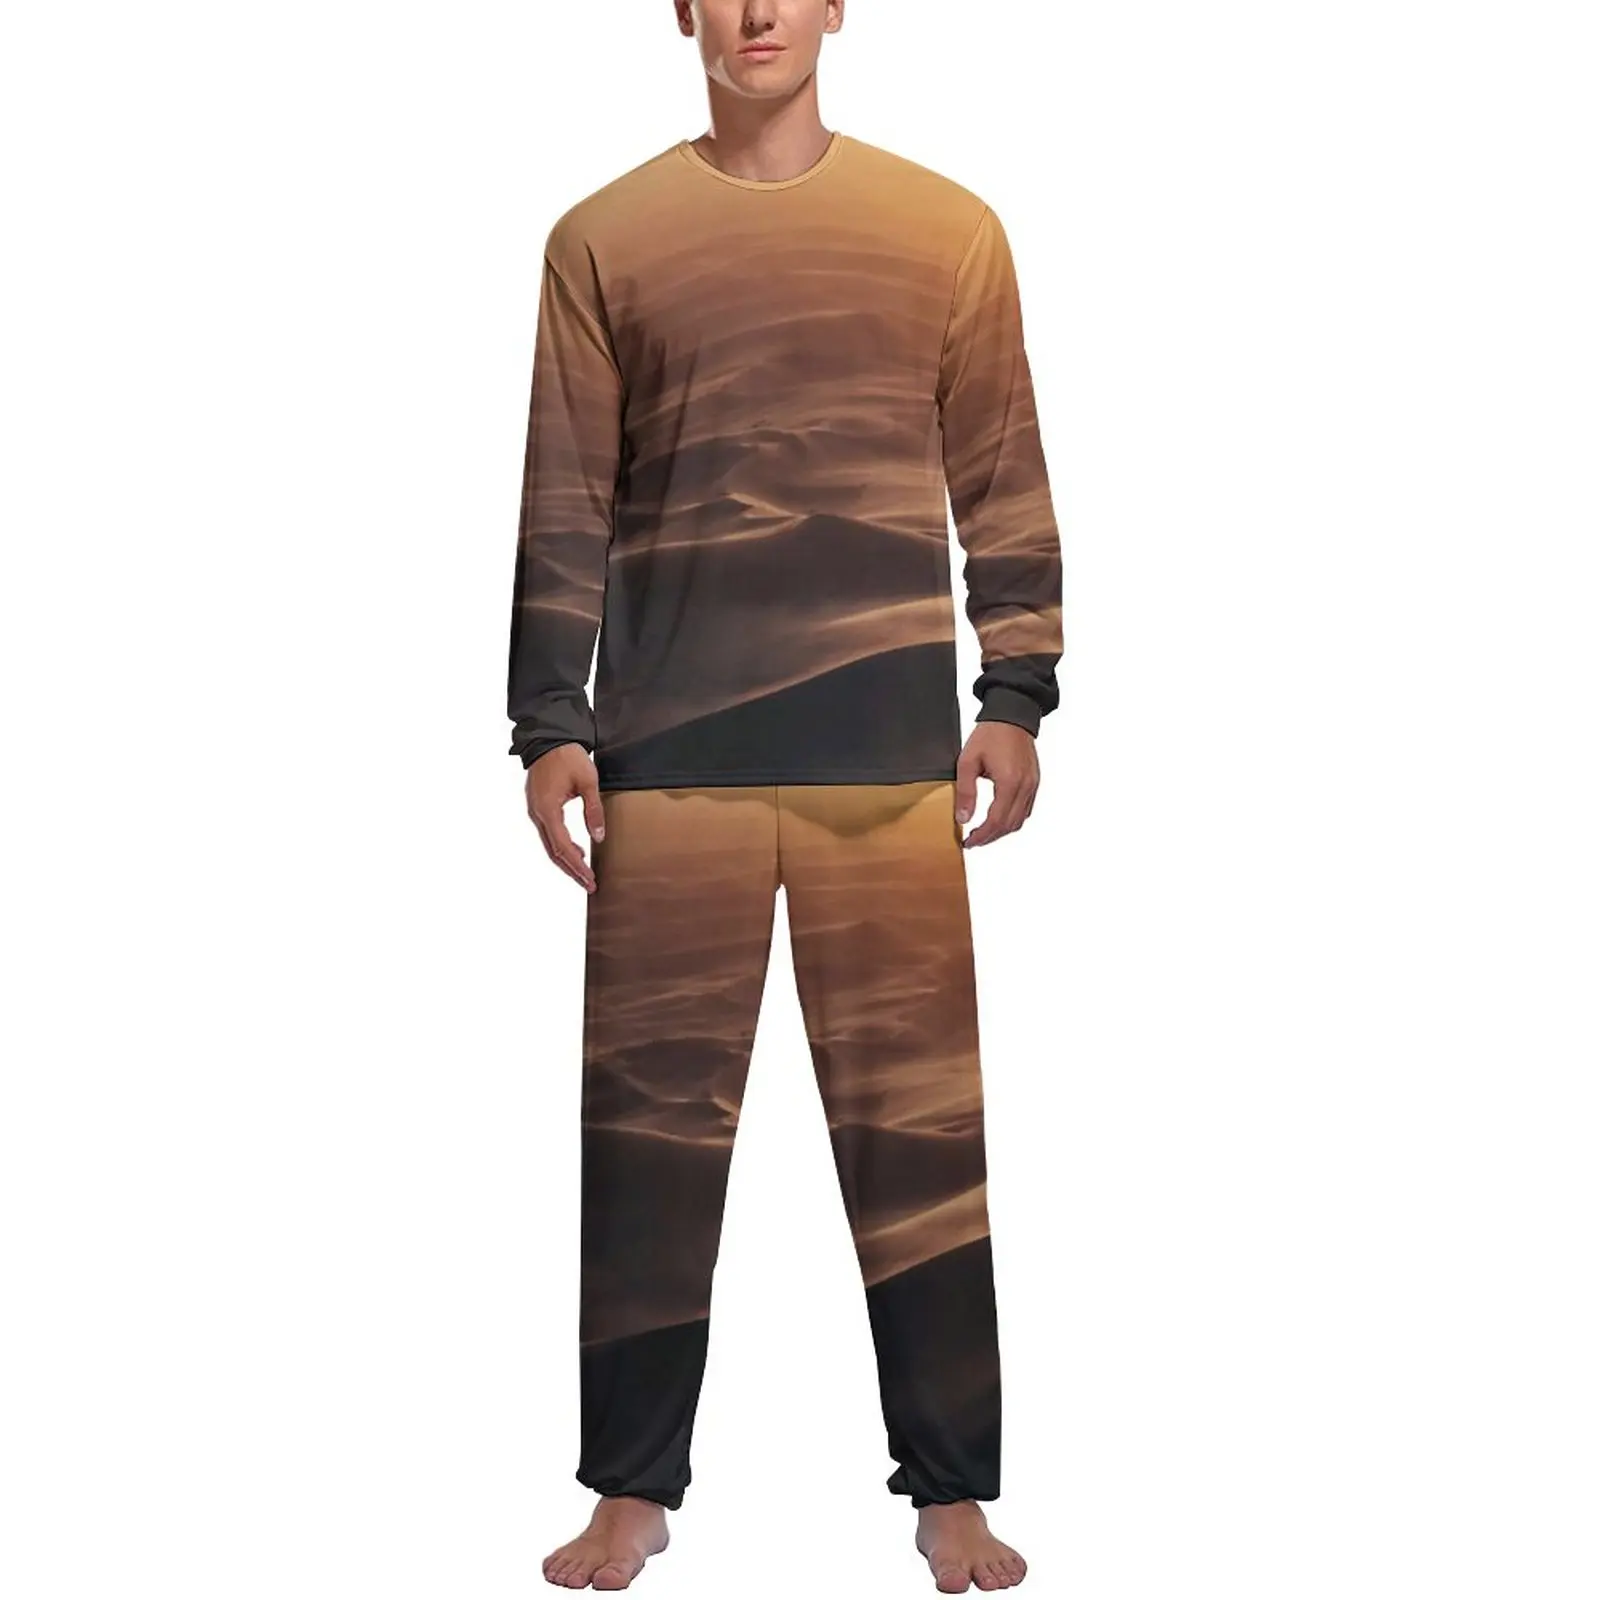 Desert Print Pajamas Men Skeleton Coast Fashion Nightwear Spring Long Sleeves 2 Pieces Casual Graphic Pajama Sets